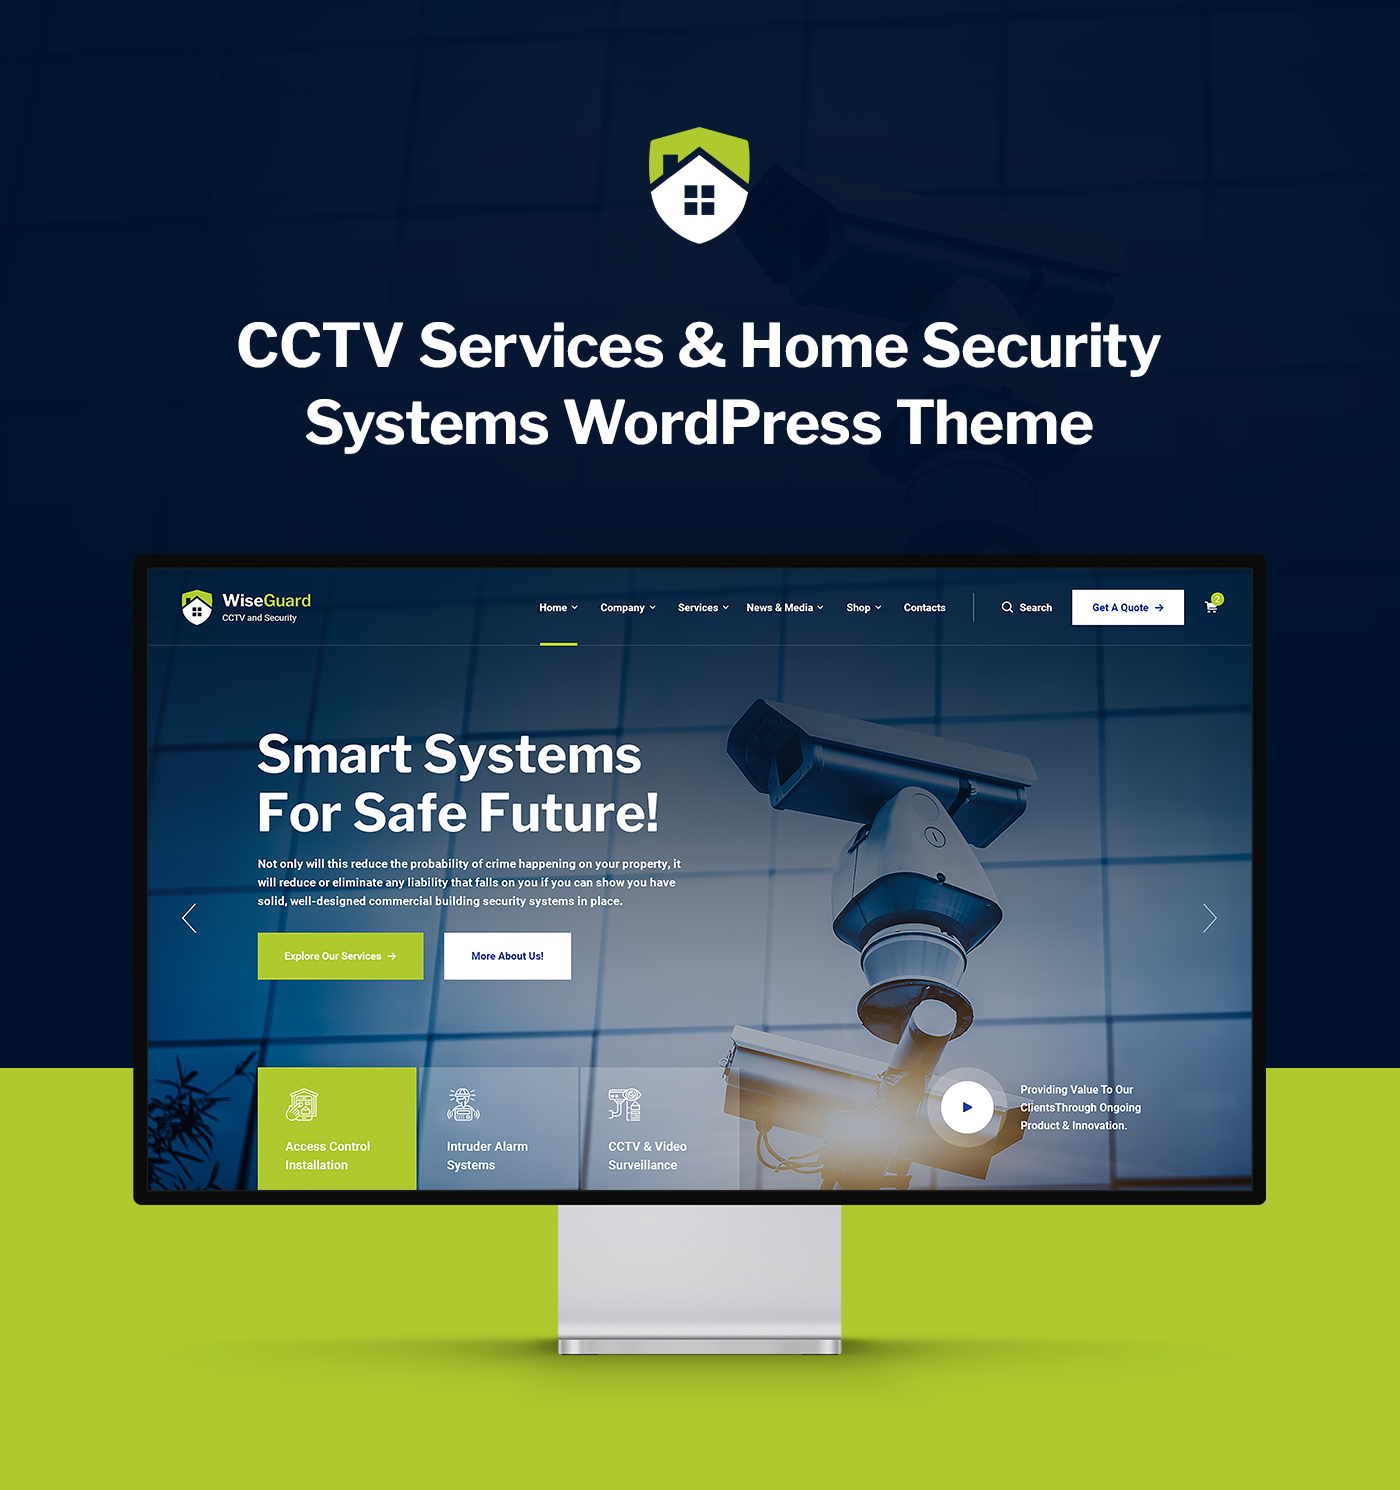 Alarm System cctv shop Cyber Security fire protection Home Automation locksmith security company Bodyguard Safety cctv company